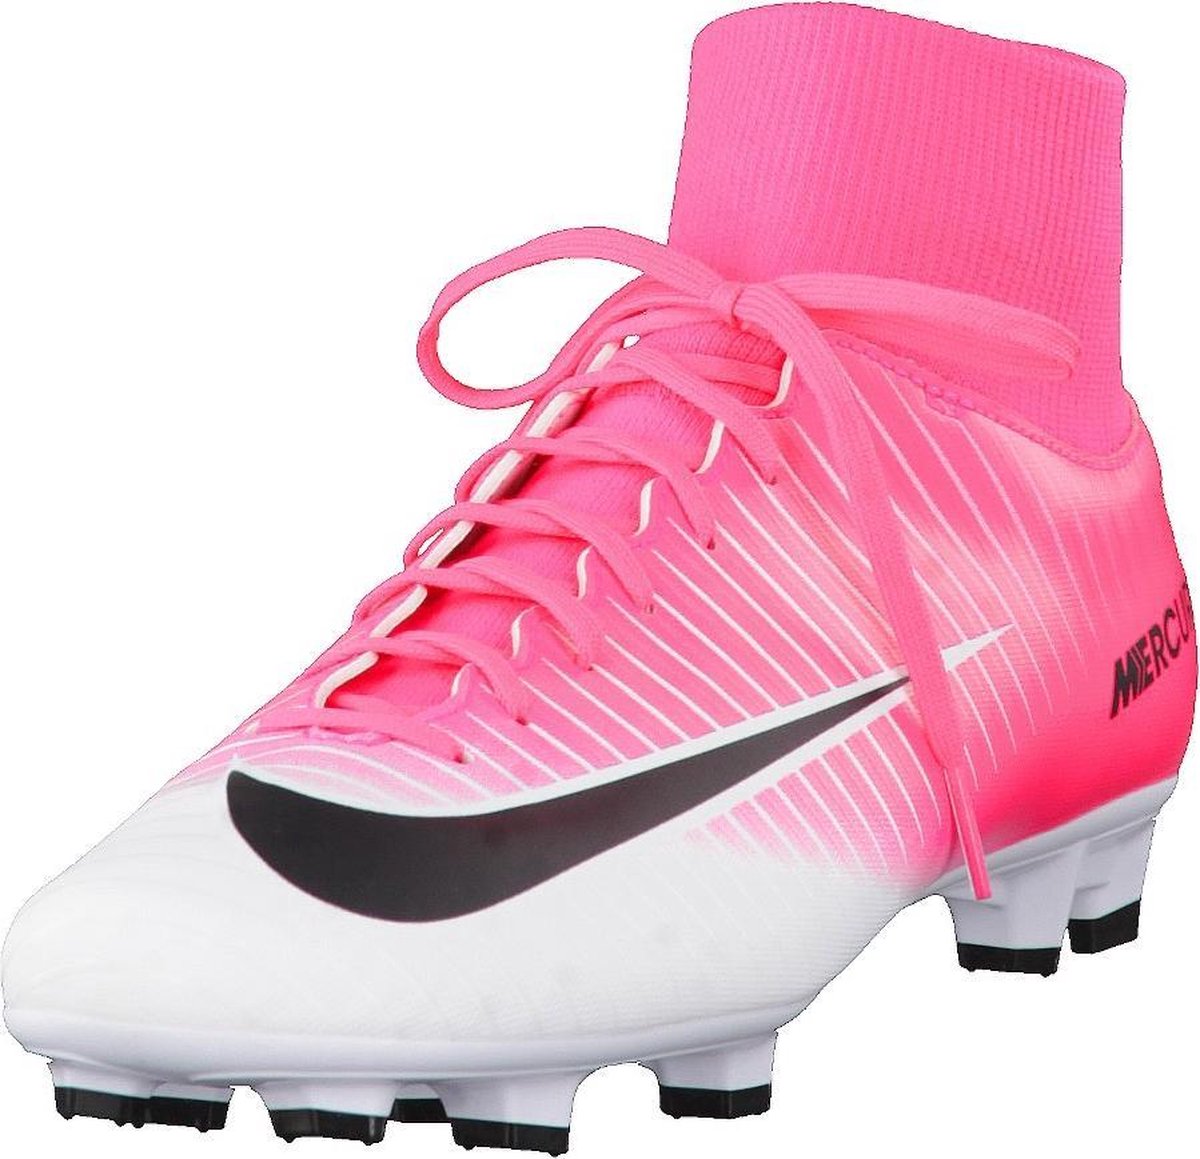 Nike Voetbalschoenen - Maat 45 - Mannen - roze/wit/zwart | bol.com